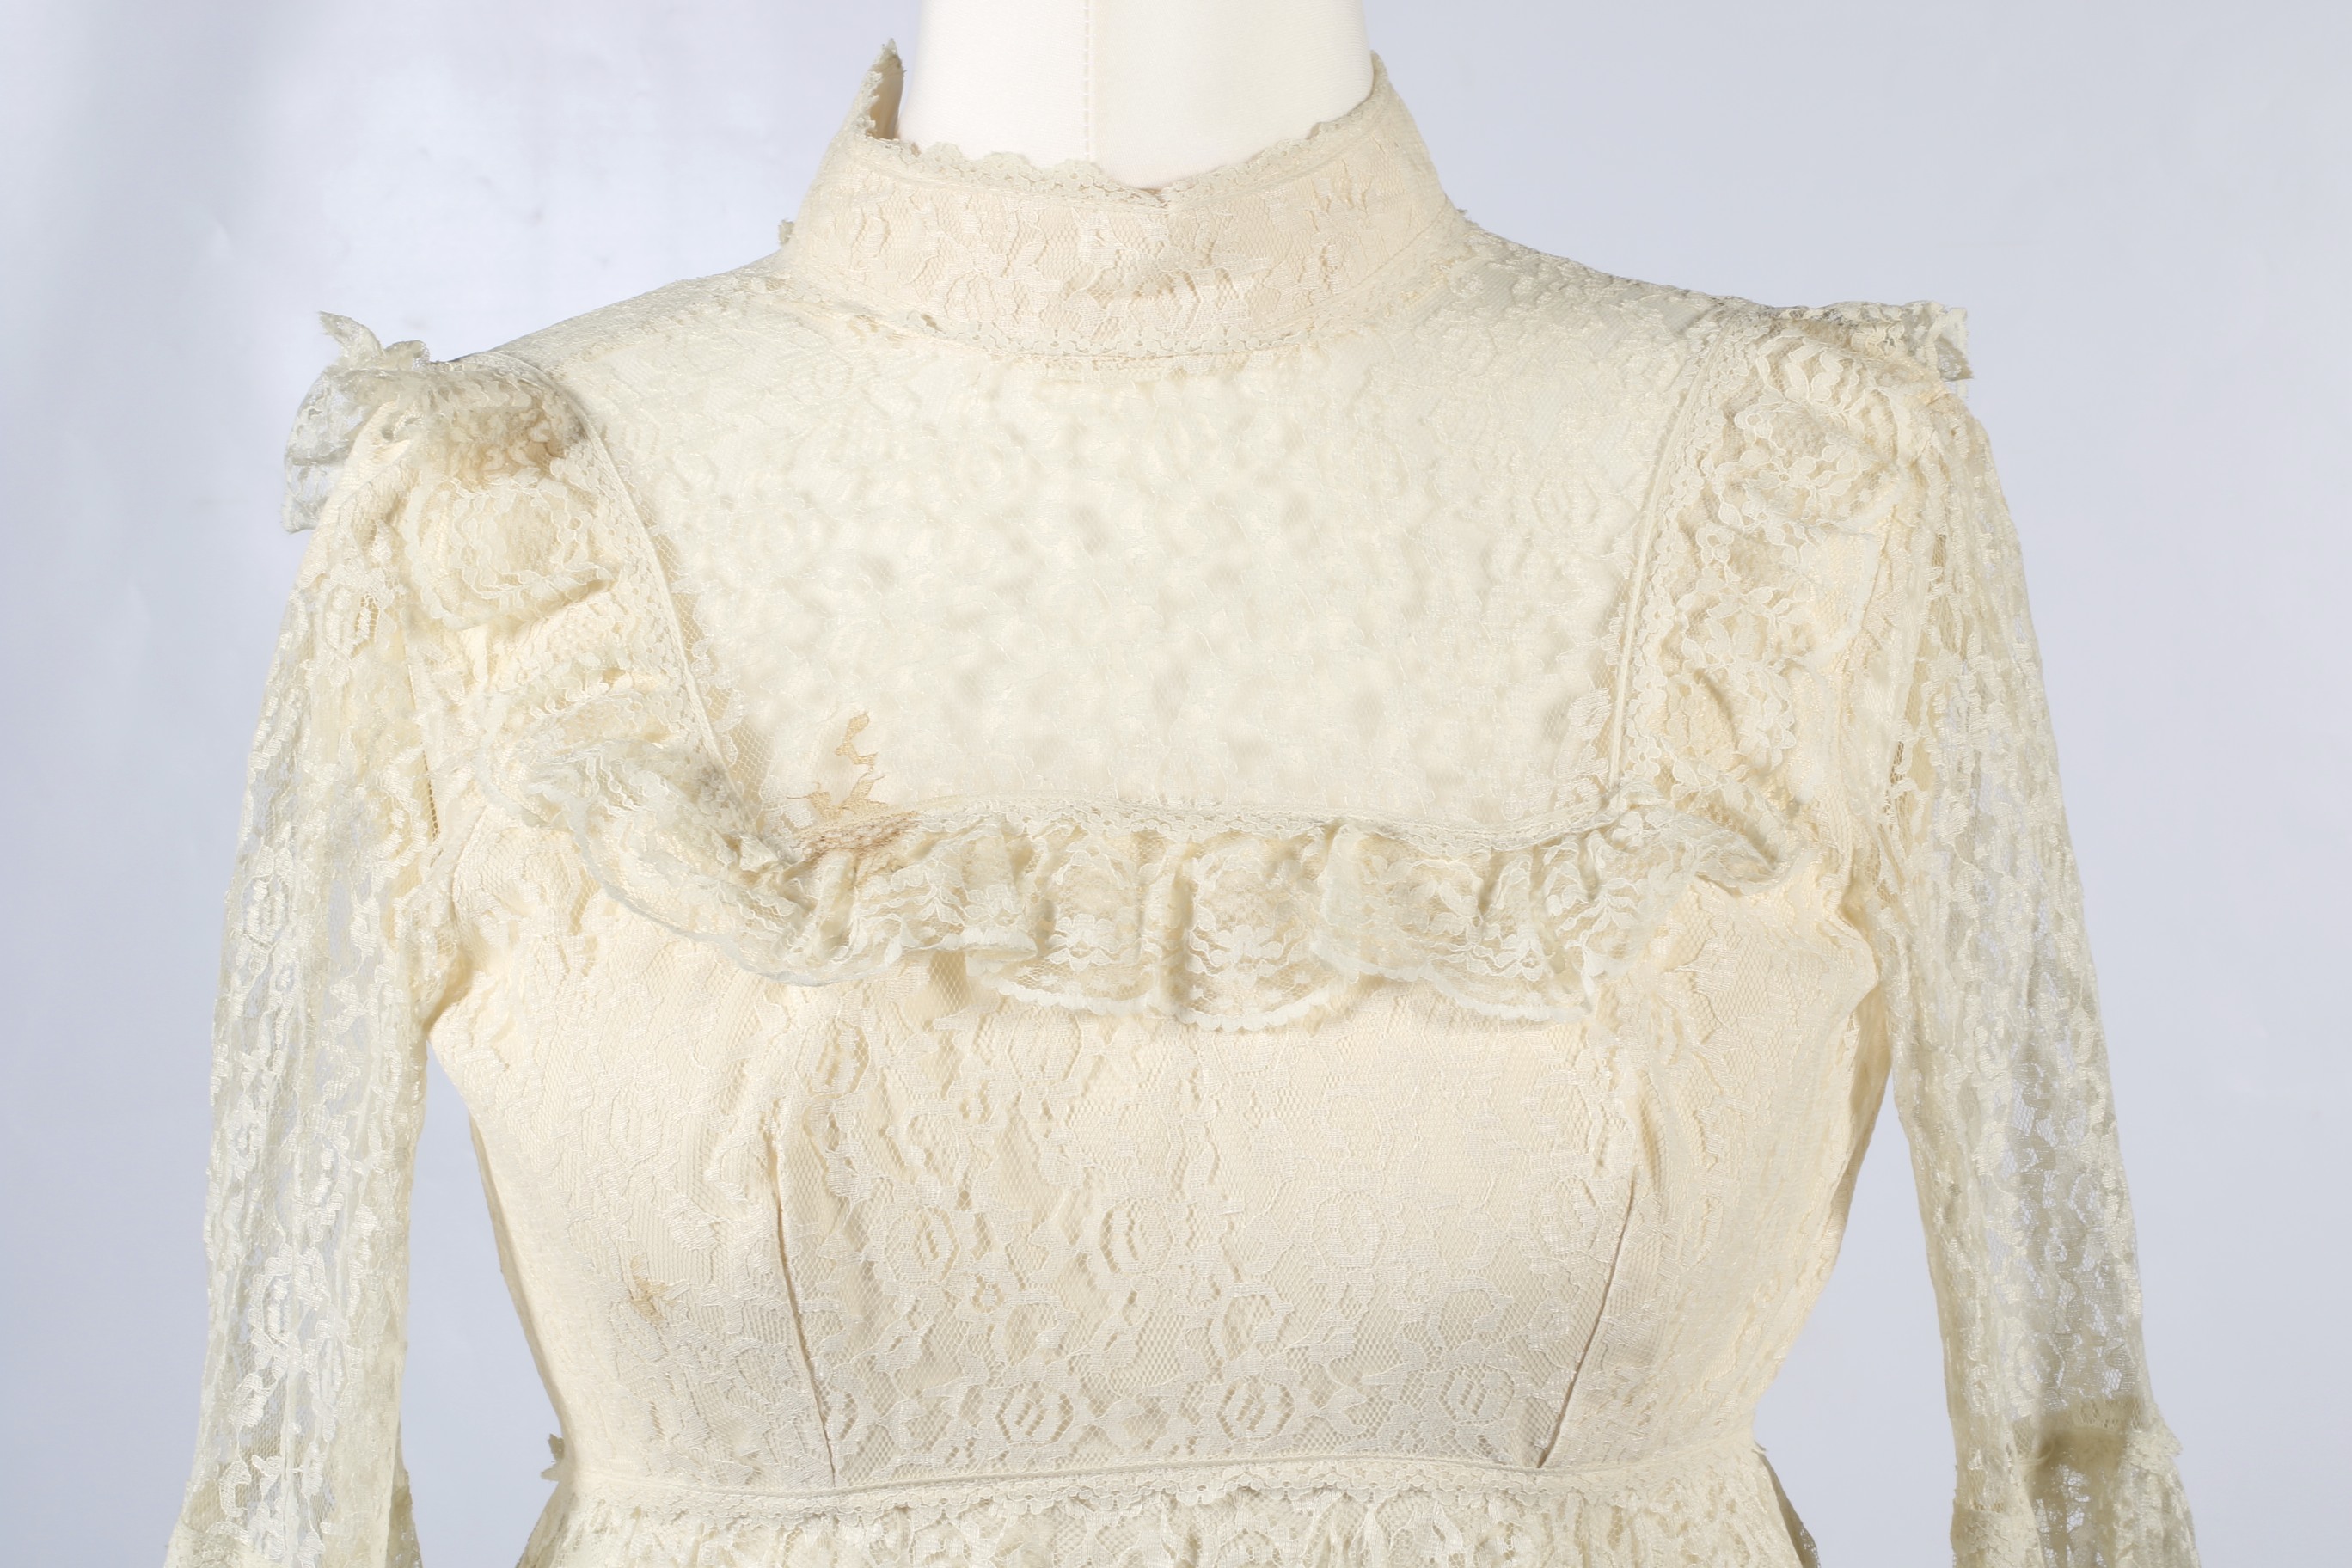 A 20th century wedding dress. - Image 2 of 3